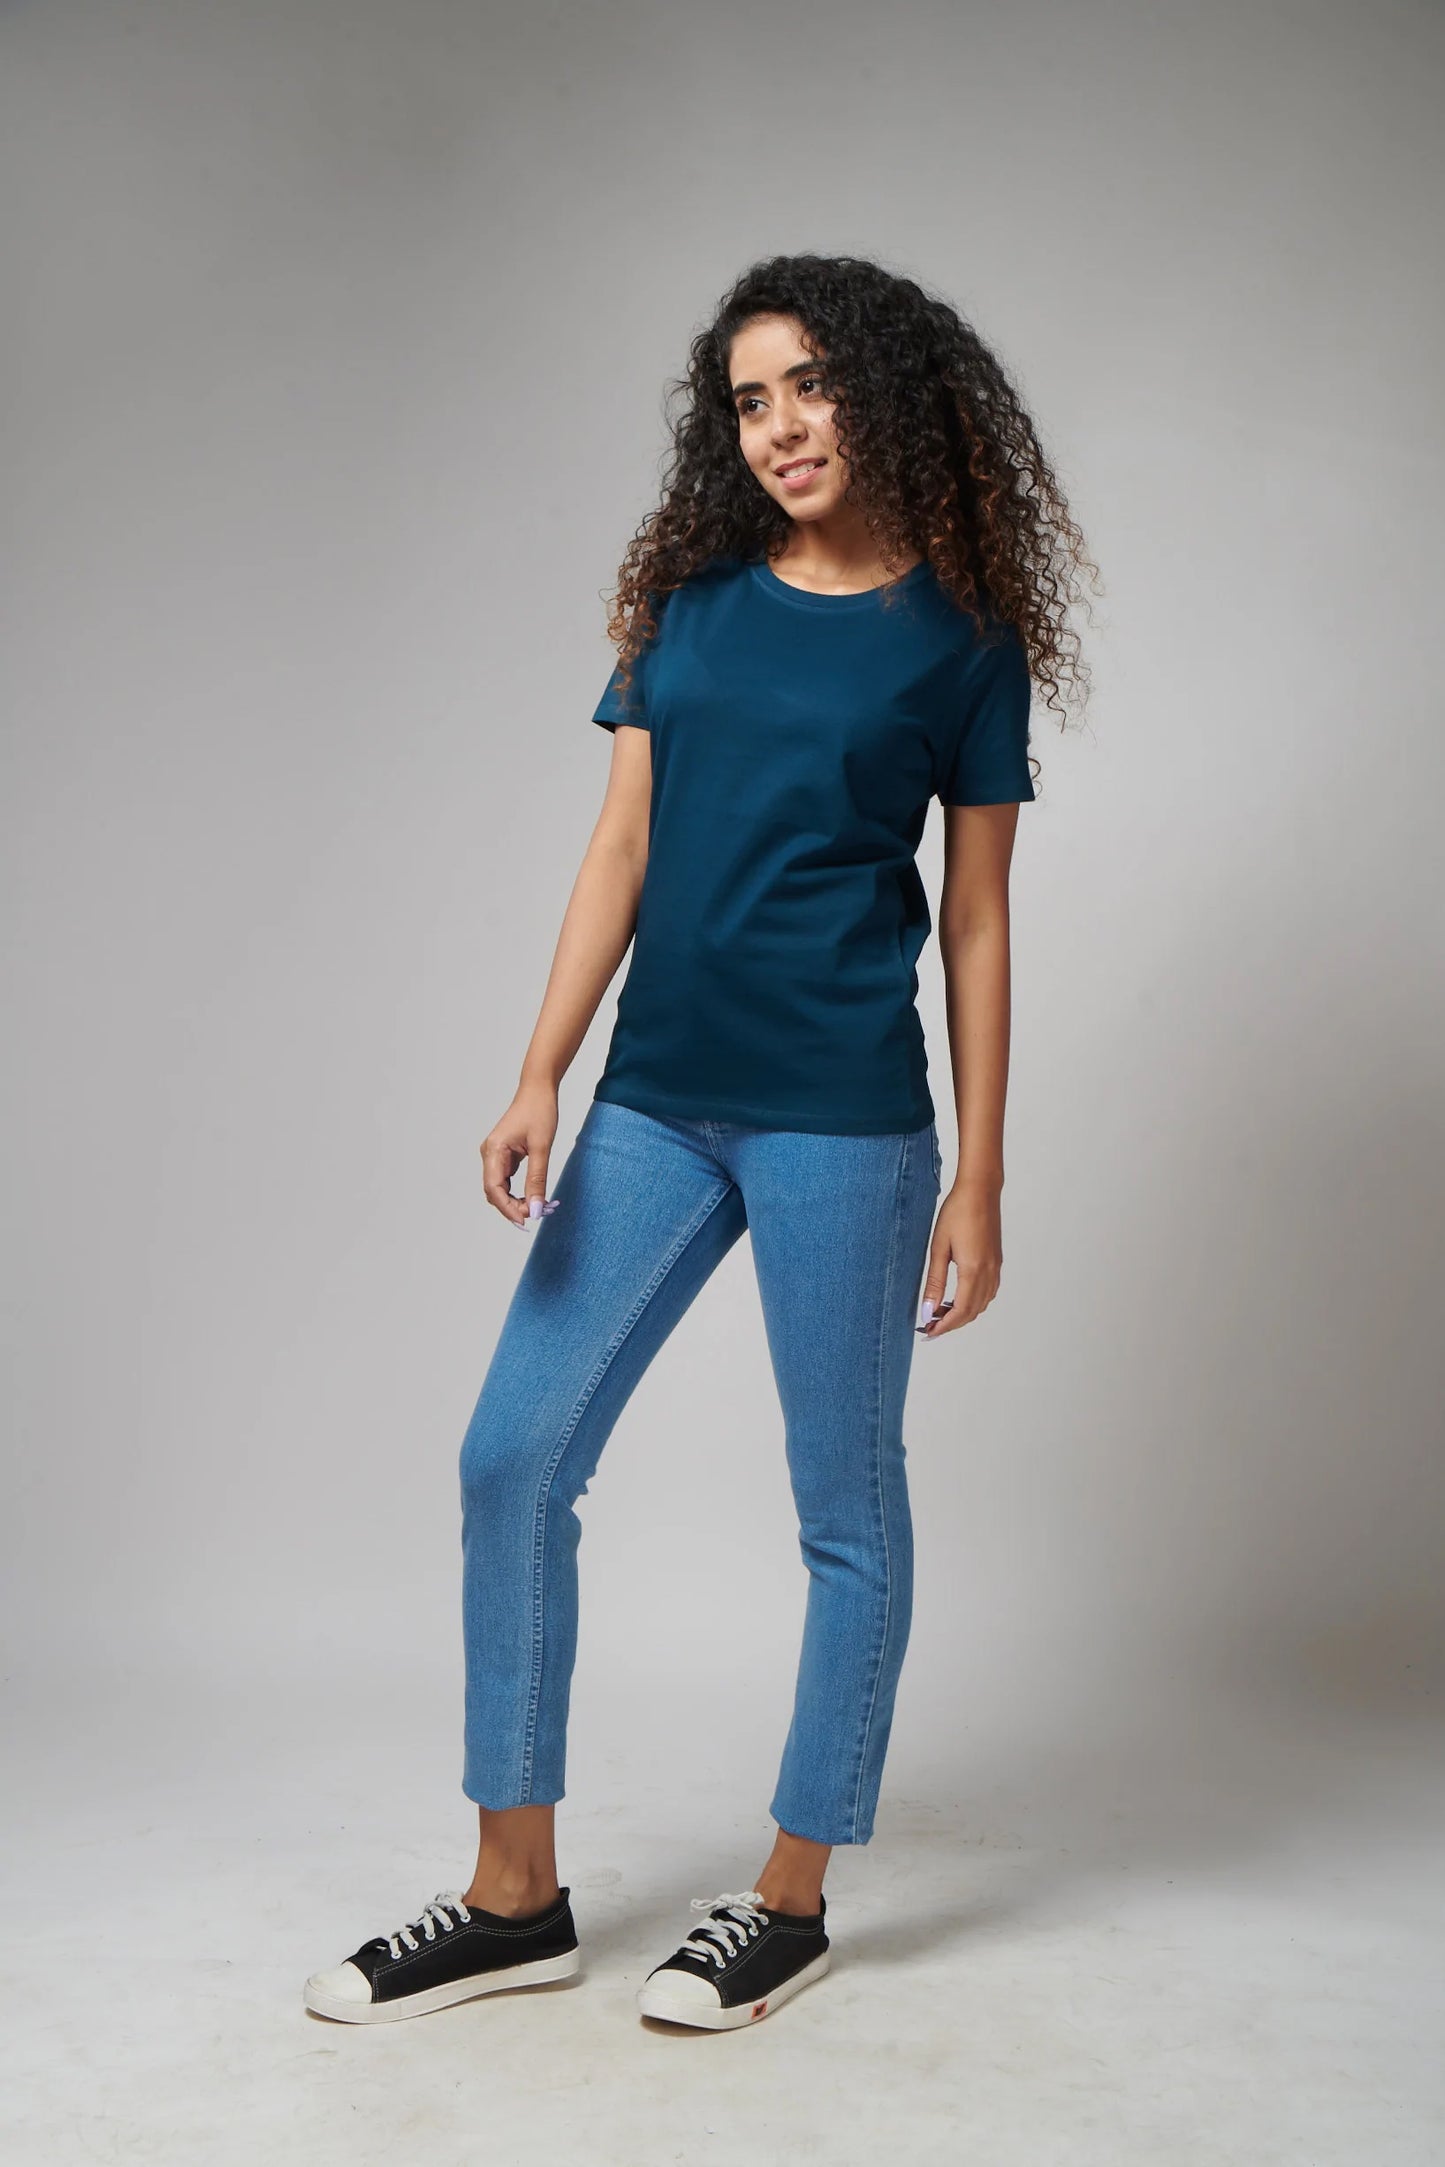 Women's Basic Petroleum Blue Half Sleeves T-Shirt